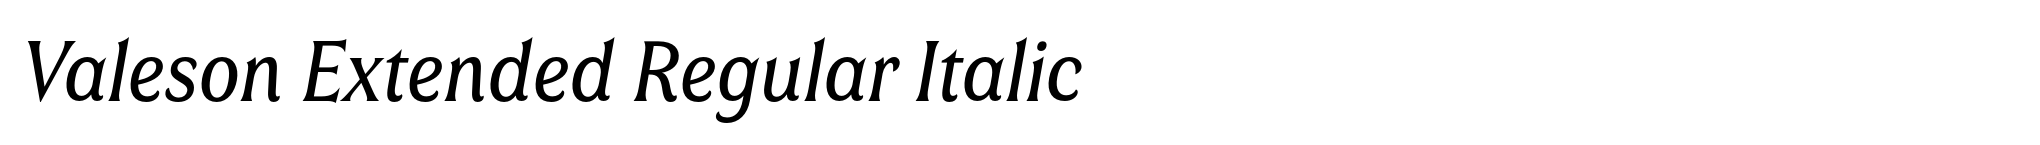 Valeson Extended Regular Italic image